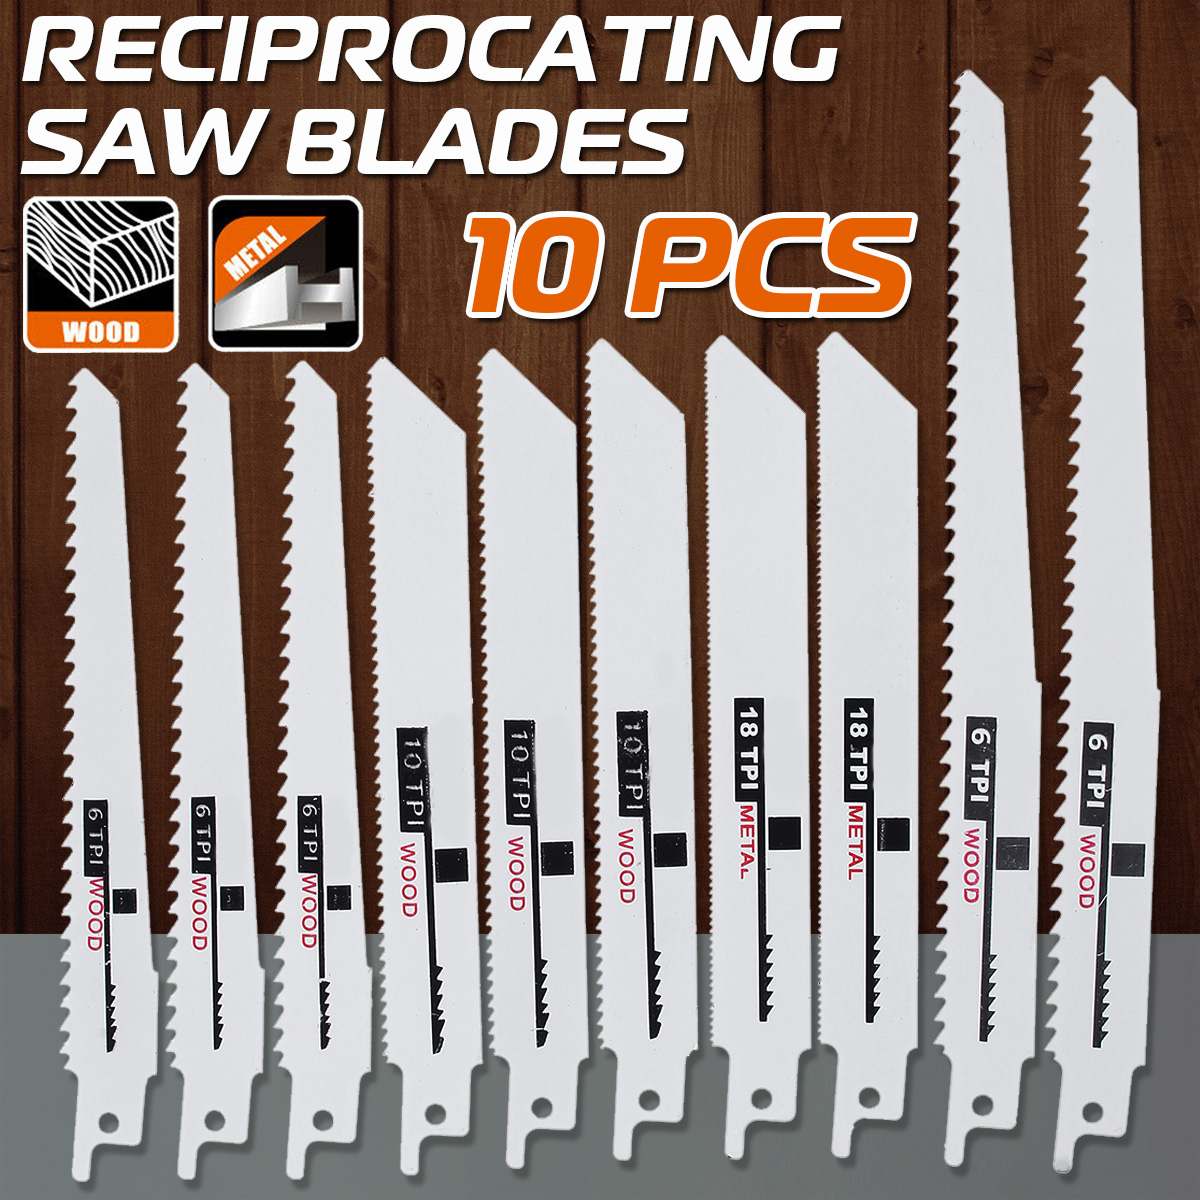 10pcs/set Bimetal Reciprocating Saw Blades For Wood Cutting Metal Cutting Woodworking Tool Power Tool Accessories